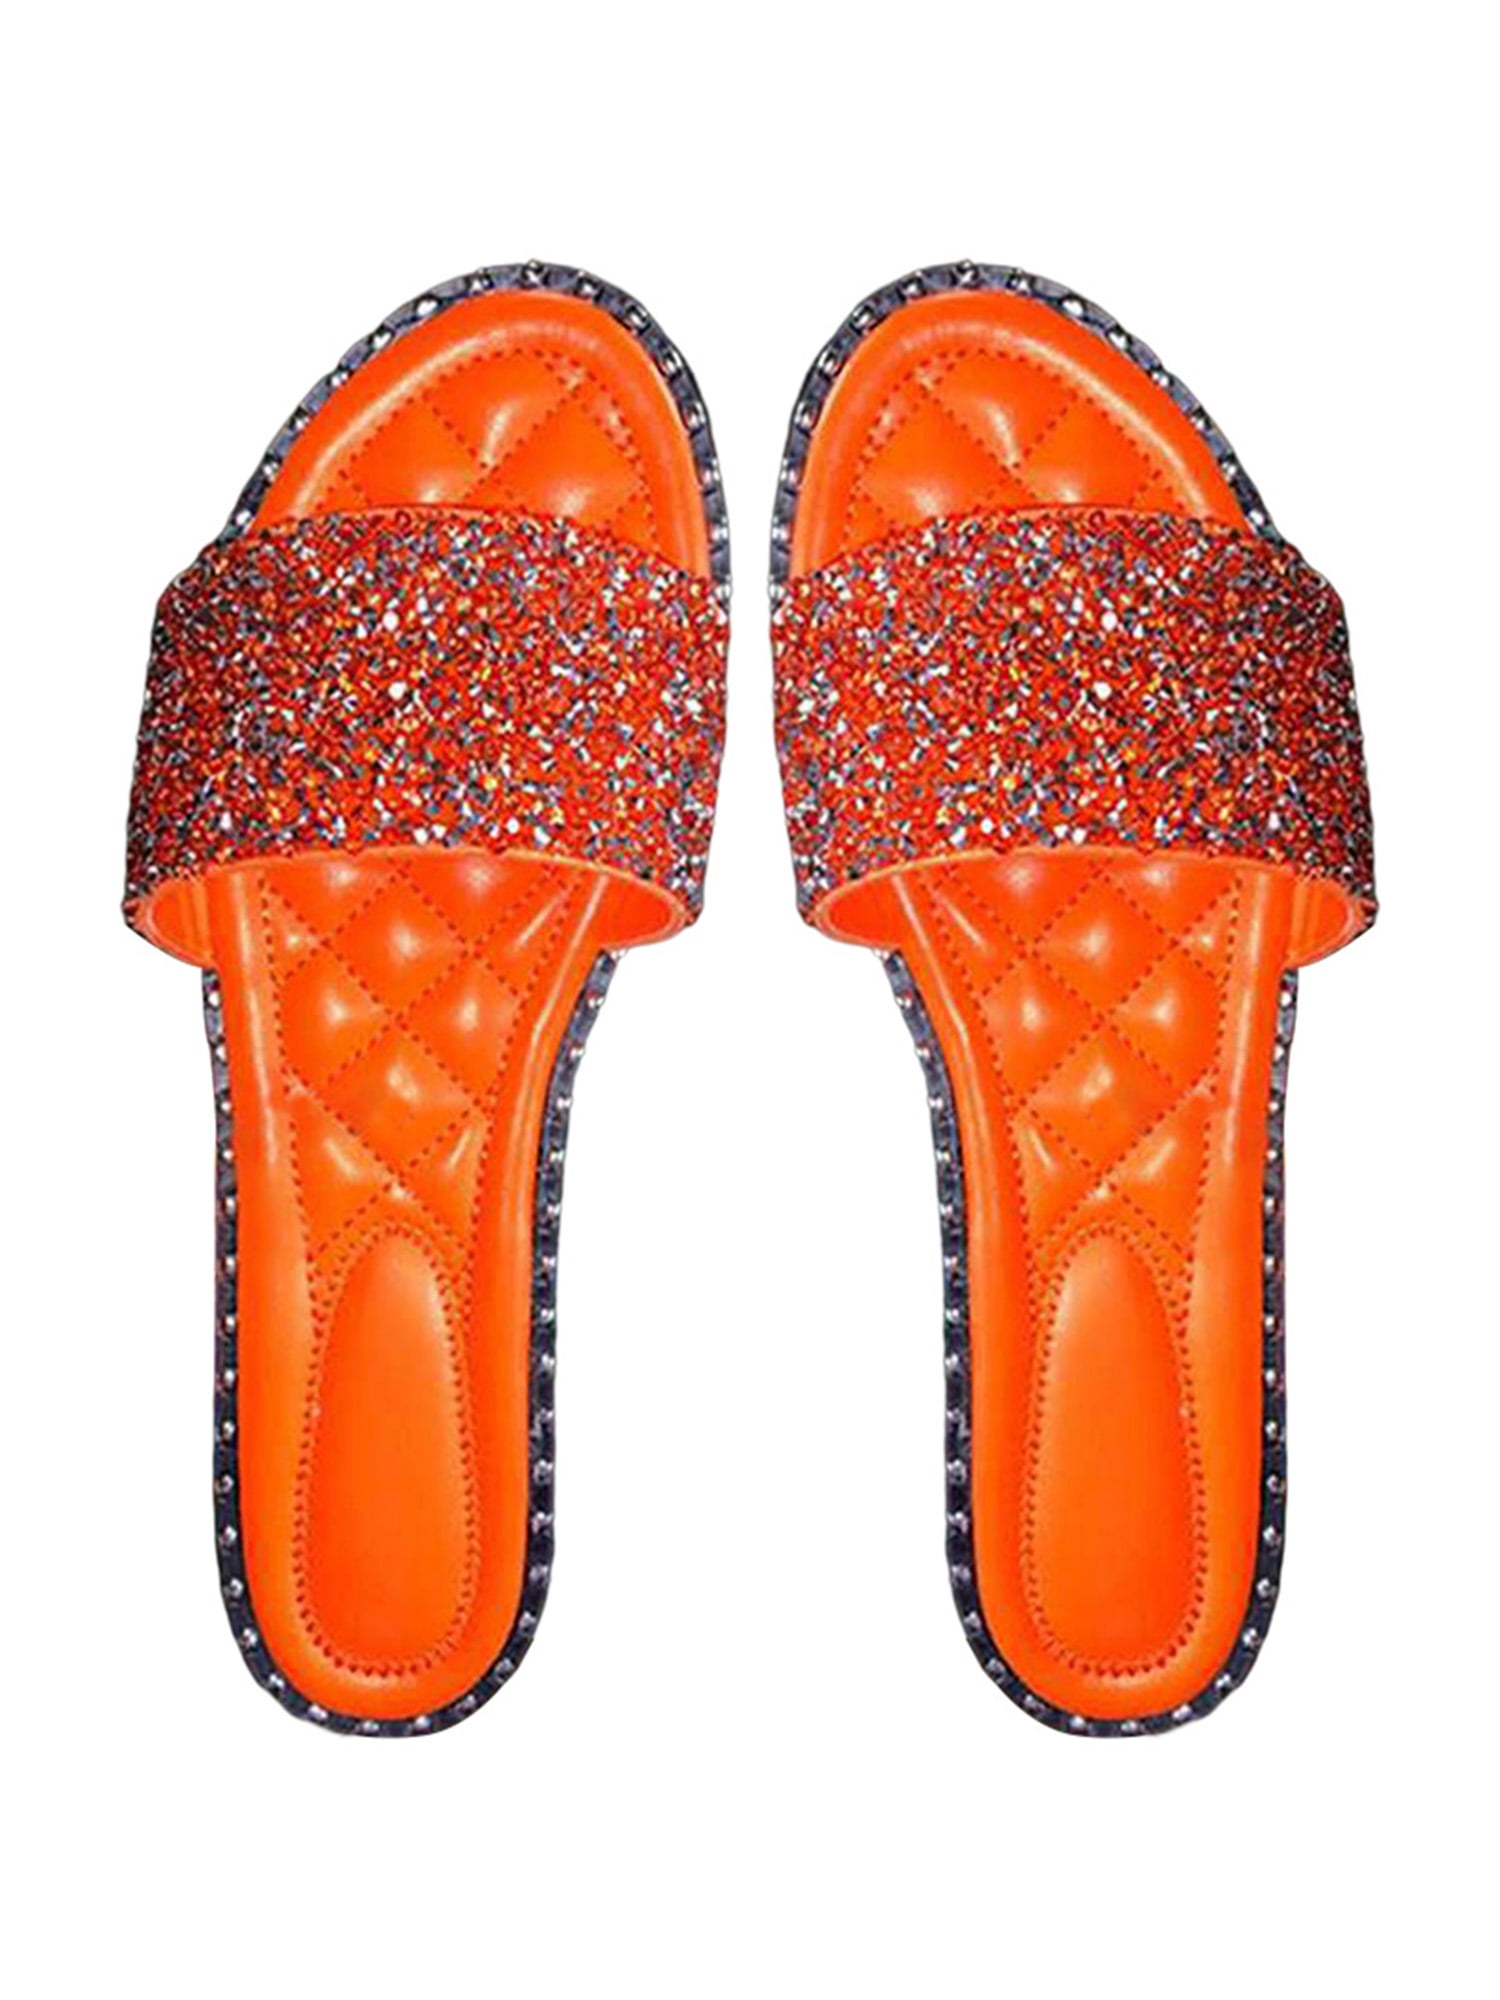 Fangasis Crystal Slides for Women Flat Toe Rhinestone Sandals Slip On Sparkle Beach Slippers US Size 4.5-11.5 Walmart.com